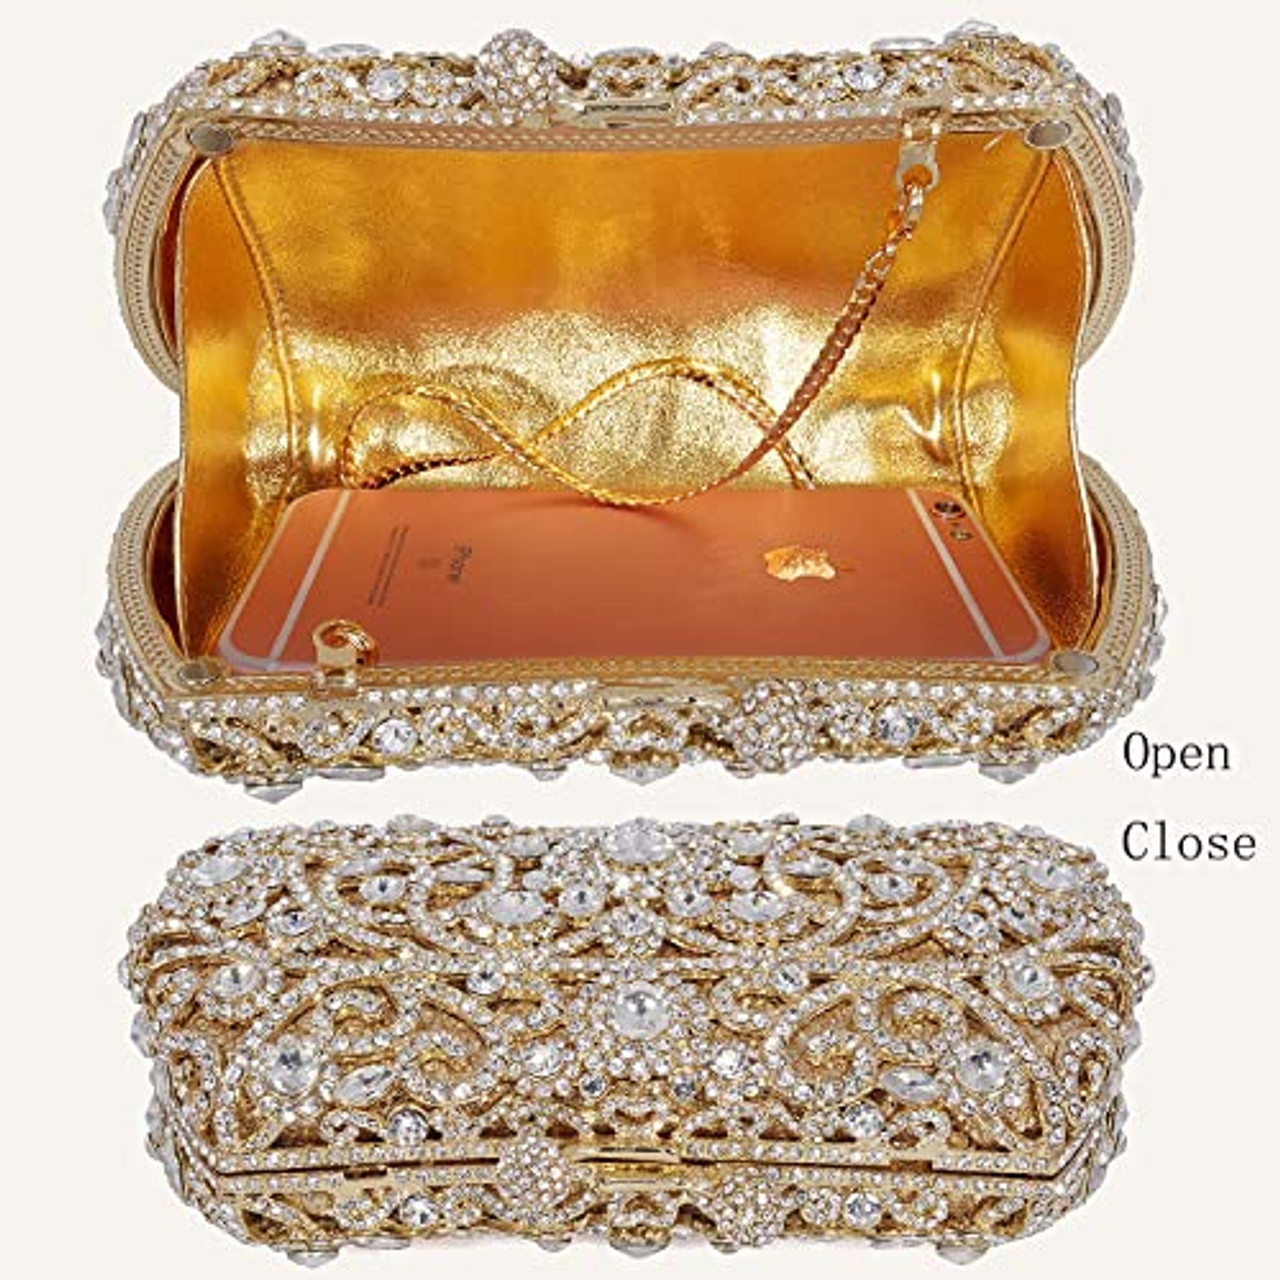 Silver Diamante Ring Clutch Bag, Aftershock Gold, AFTERSHOCK GOLD